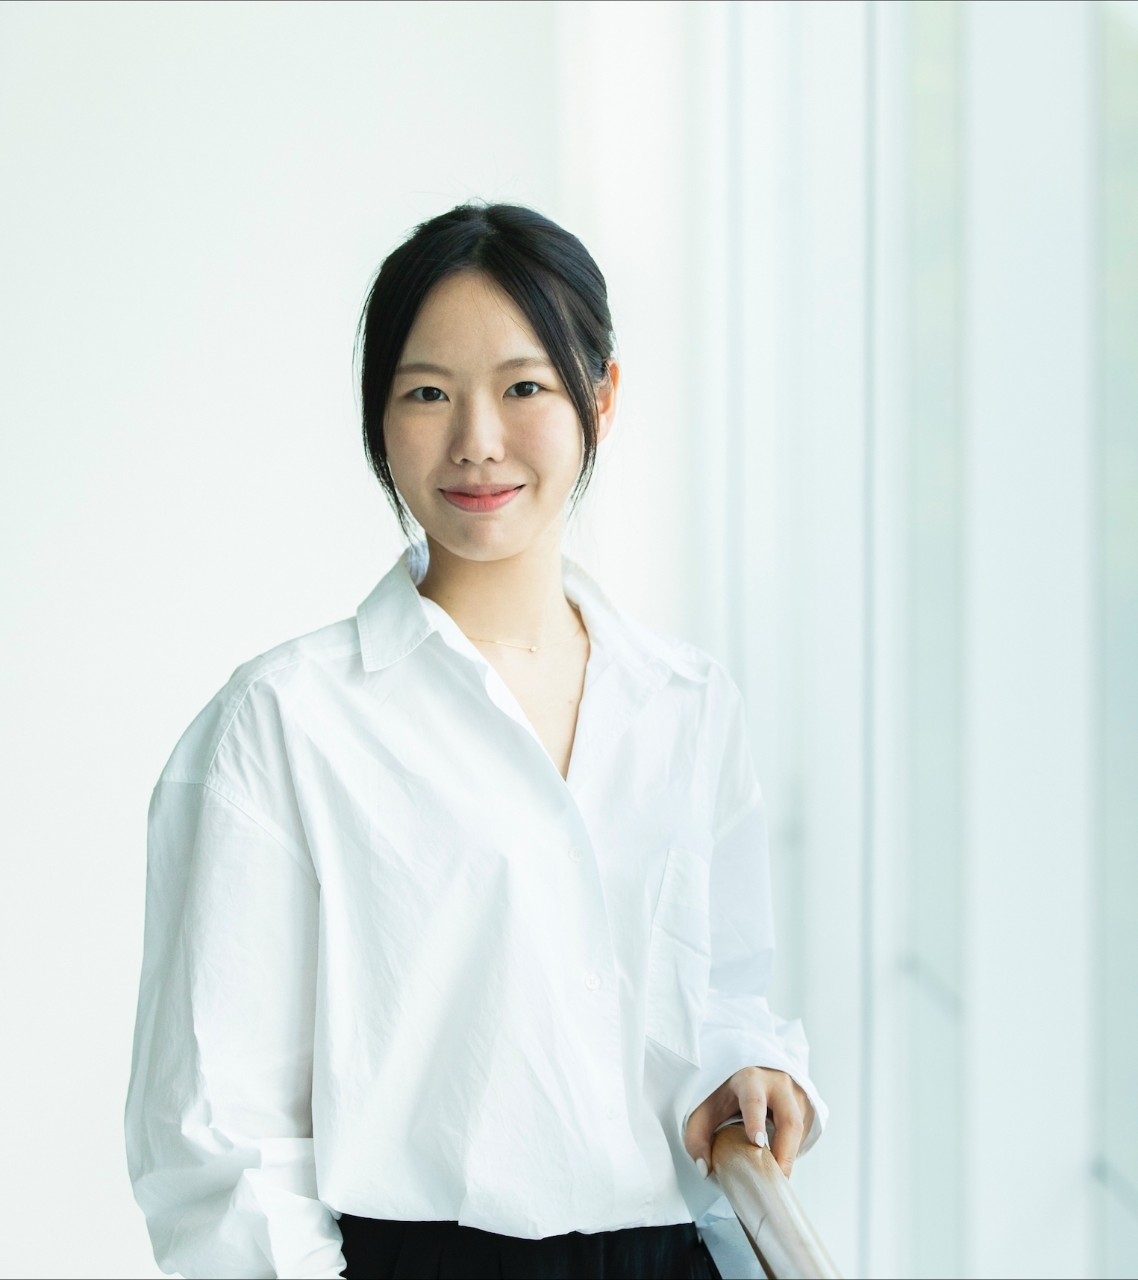 Yili Song - PhD Student